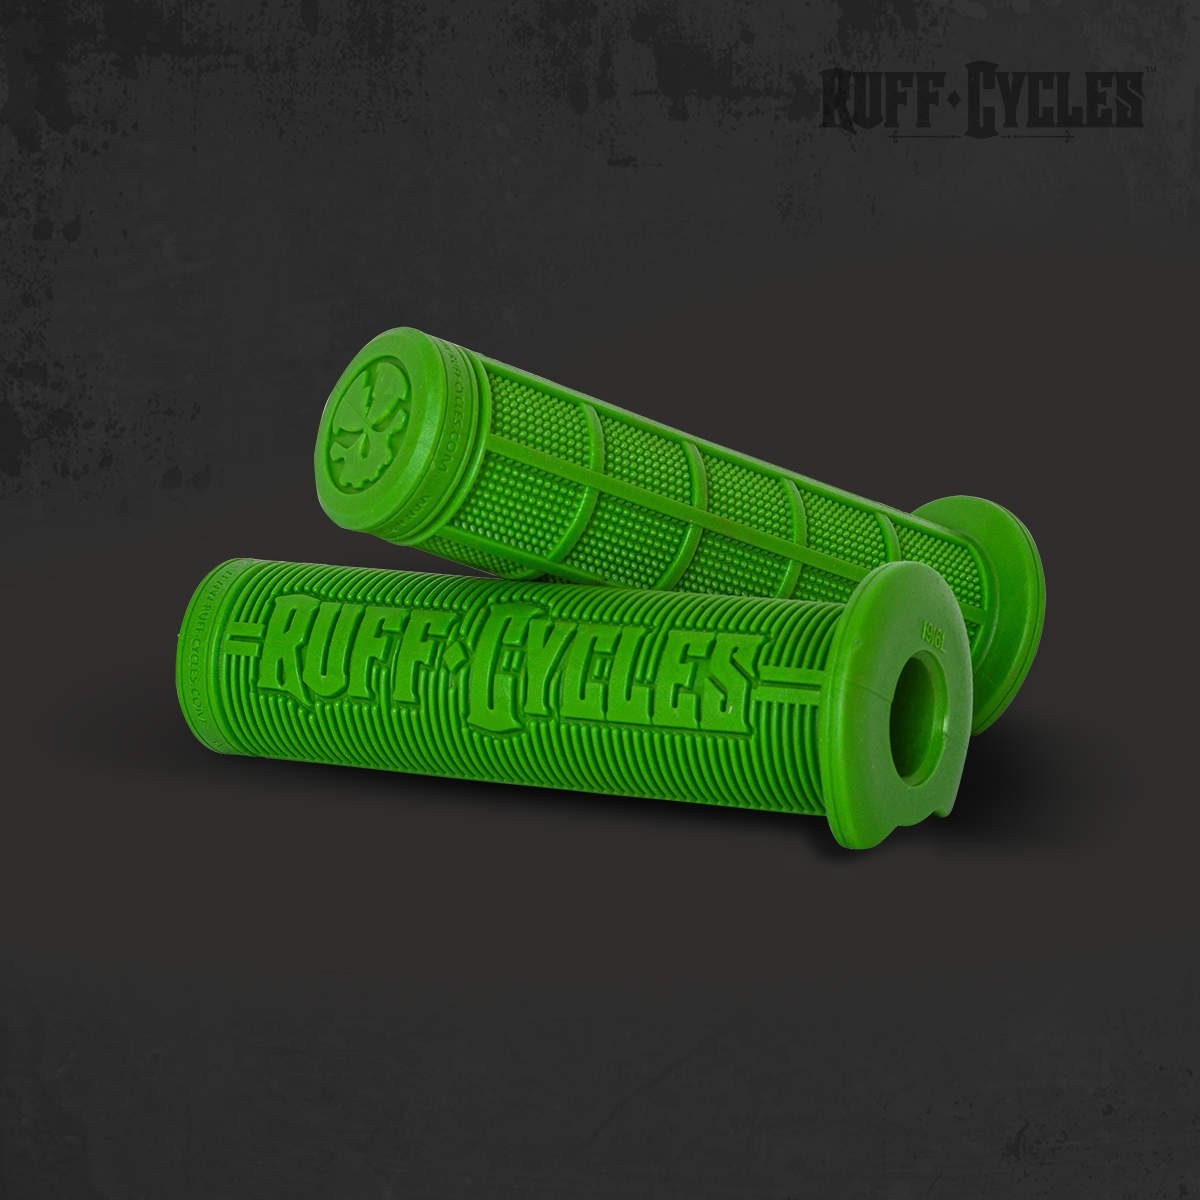 ruff-cycles-lil-buddy-grips-green-1